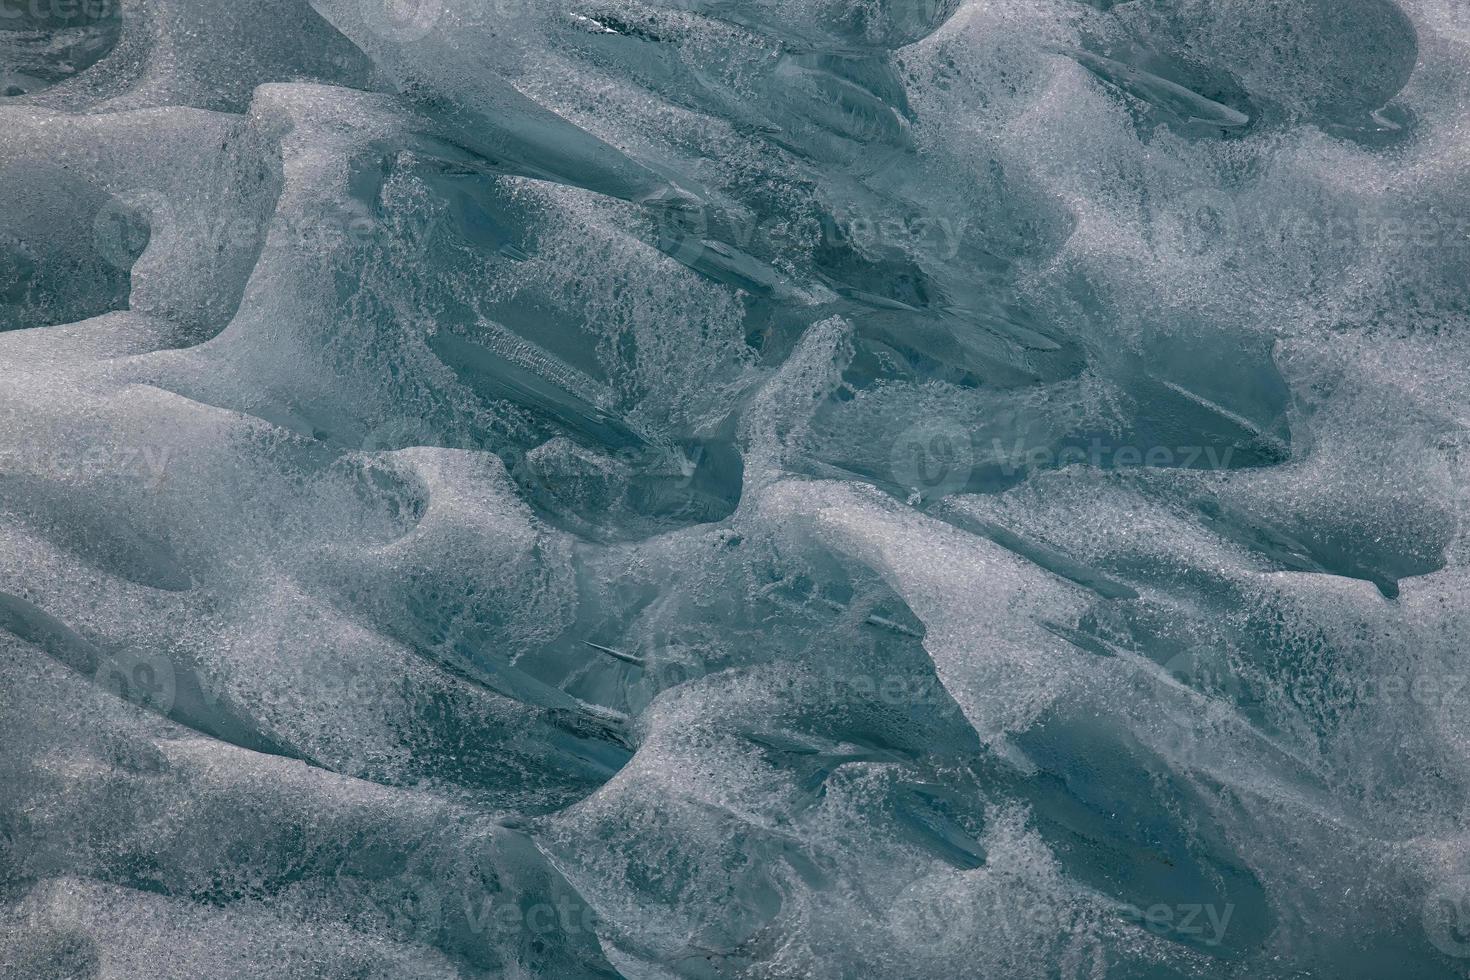 ijsbergtextuur, endicottarm, alaska foto